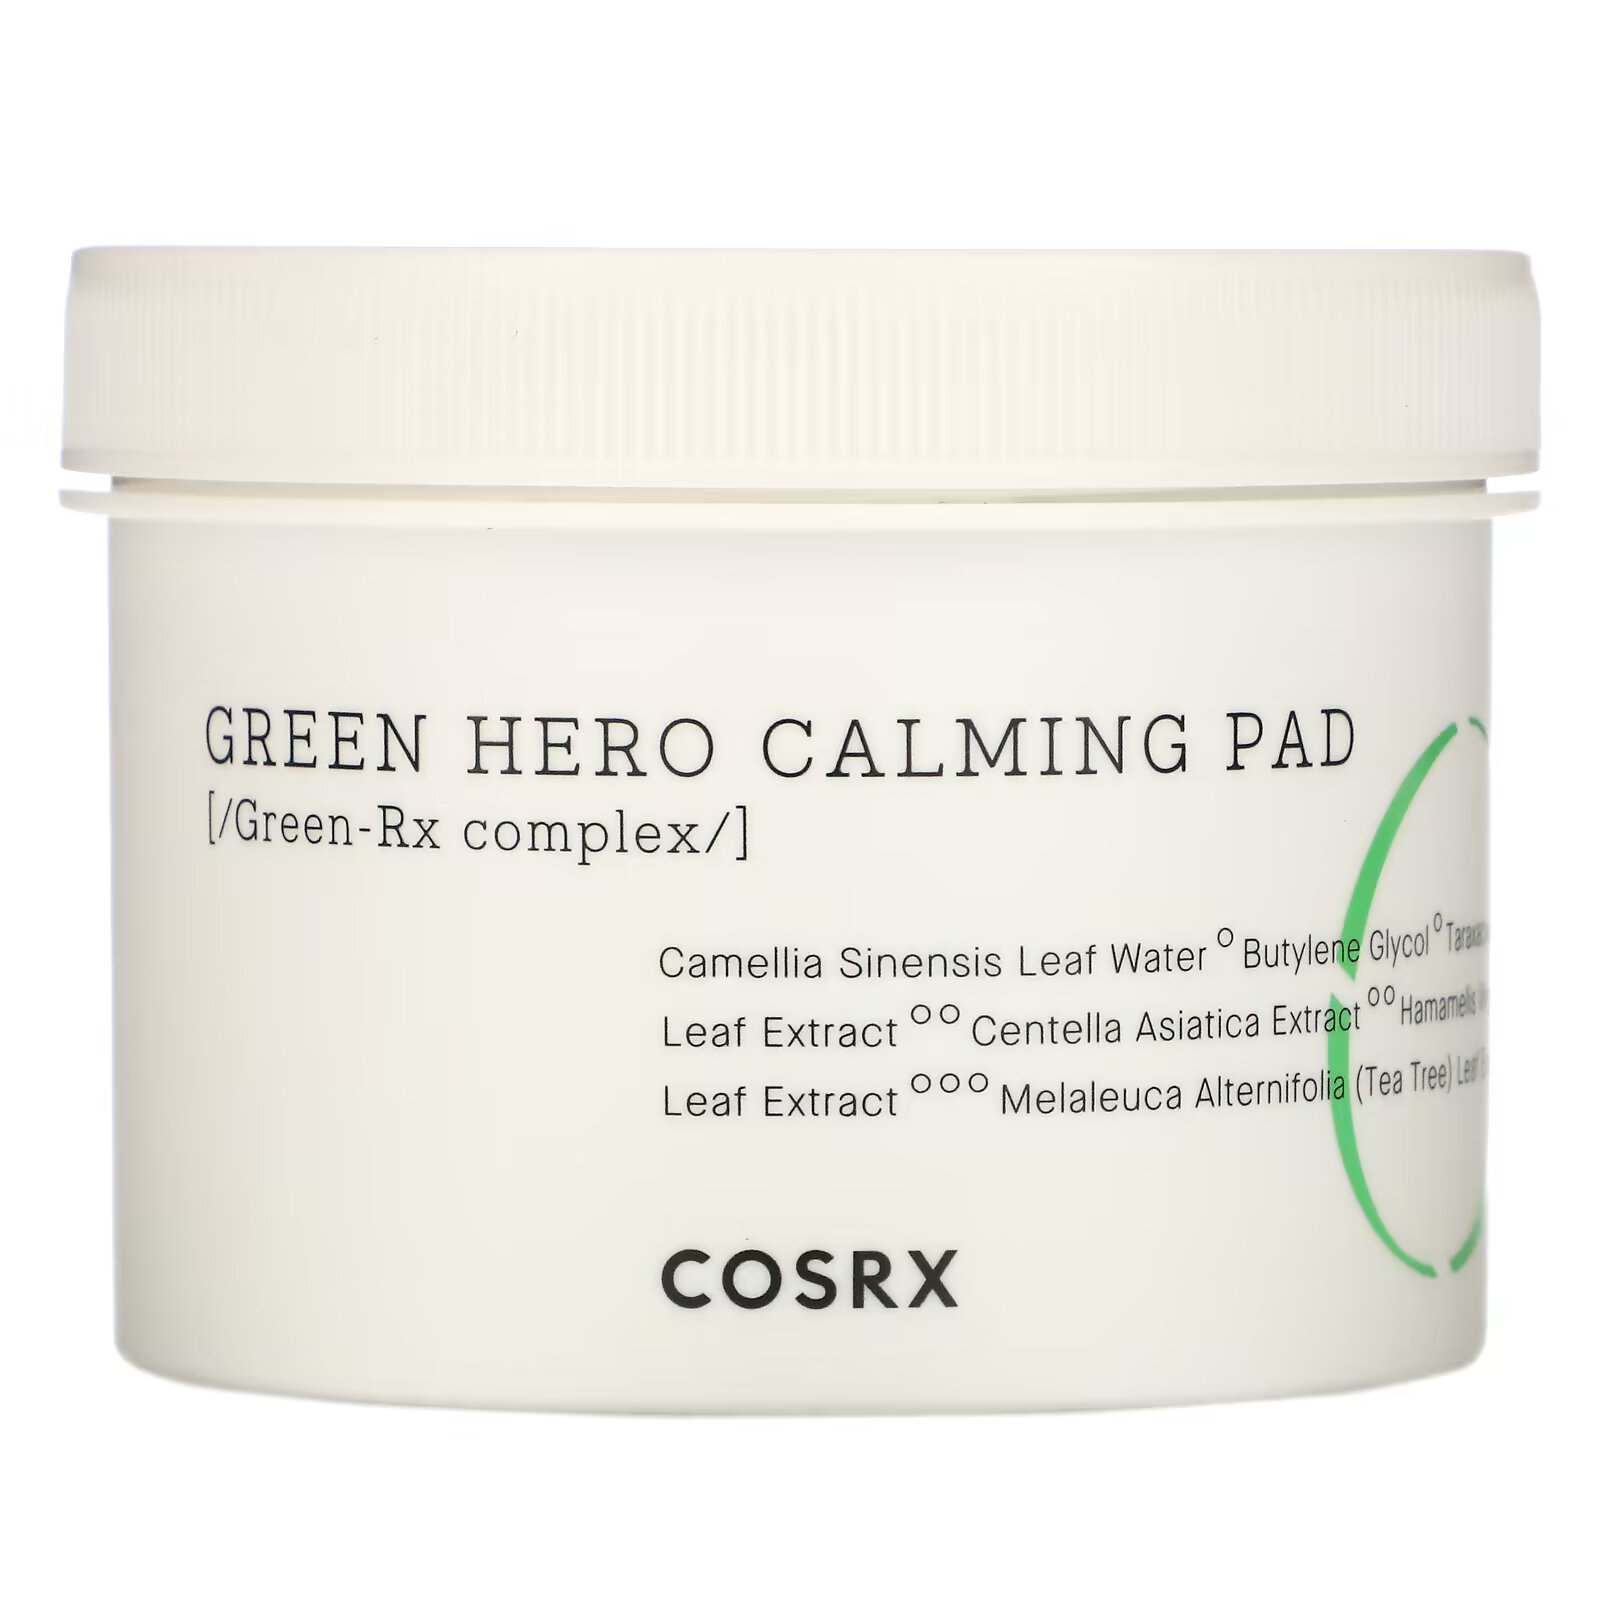 Cosrx, One Step Green Hero Calming Pad, успокаивающие диски, 70 шт., 135 мл (4,56 жидк. унции) успокаивающие пэды для лица cosrx one step green hero calming pad 70 шт